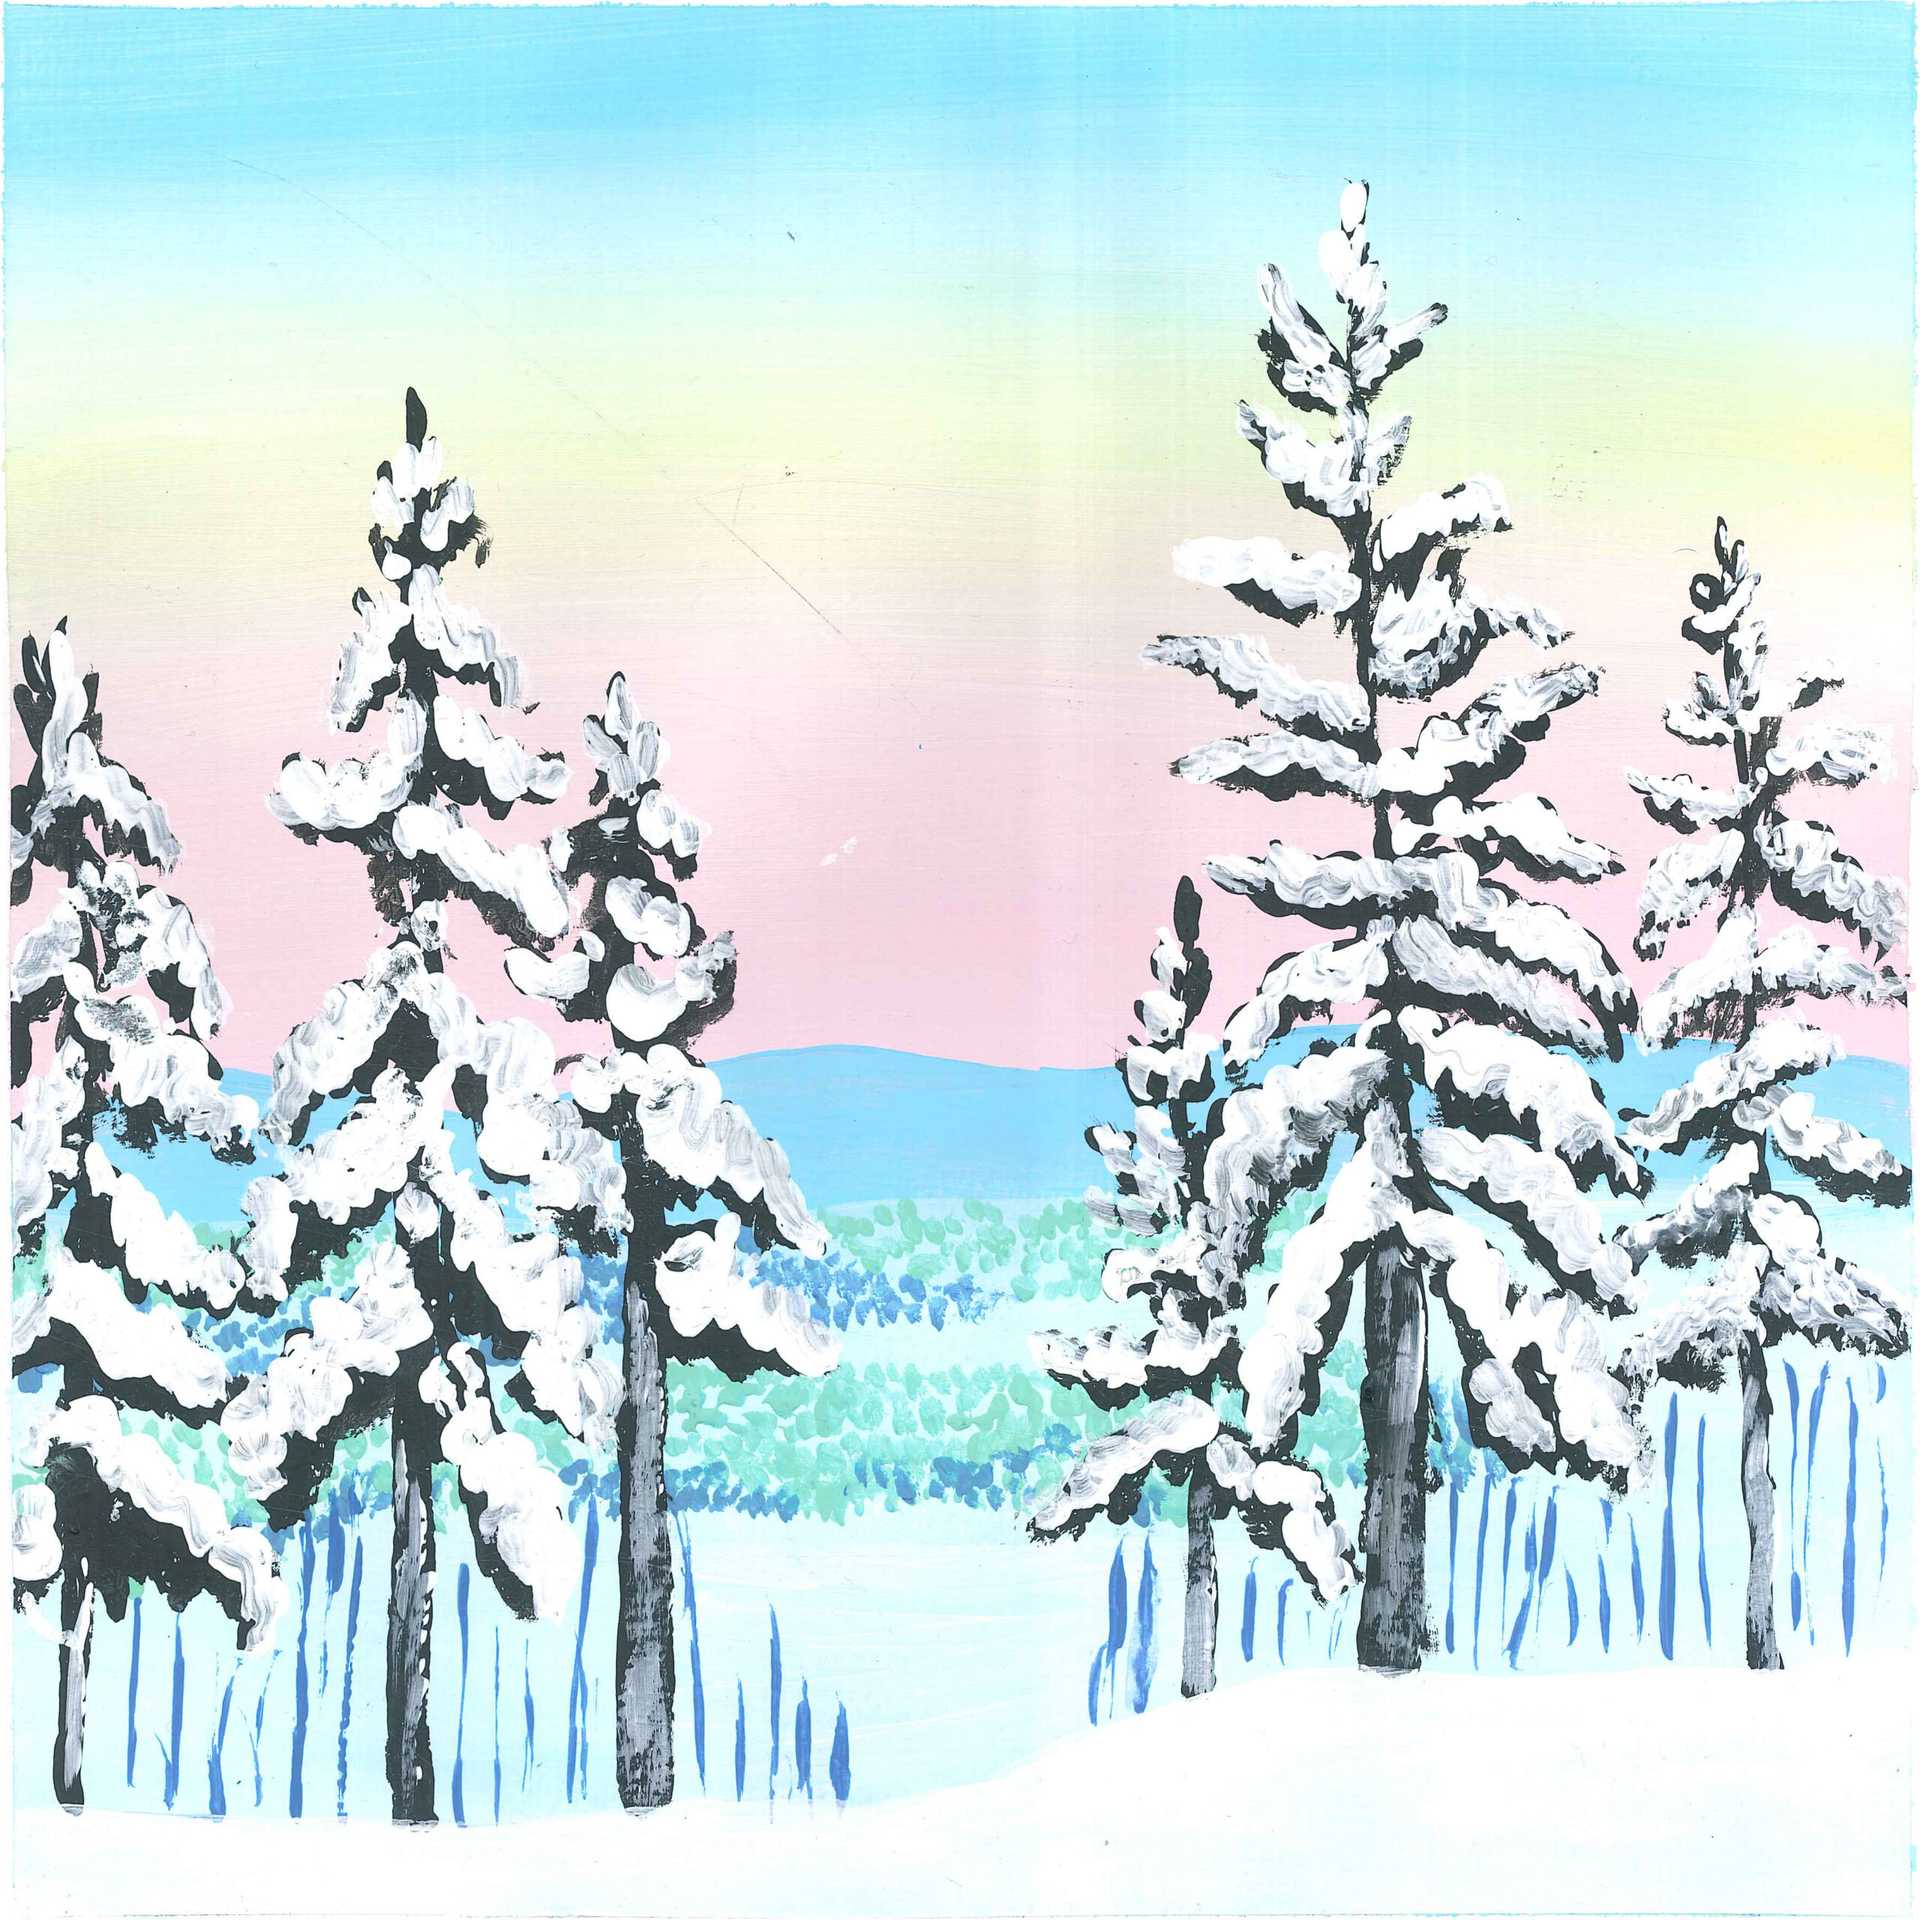 Creaking Trees in Winter - nature soundscape - earth.fm